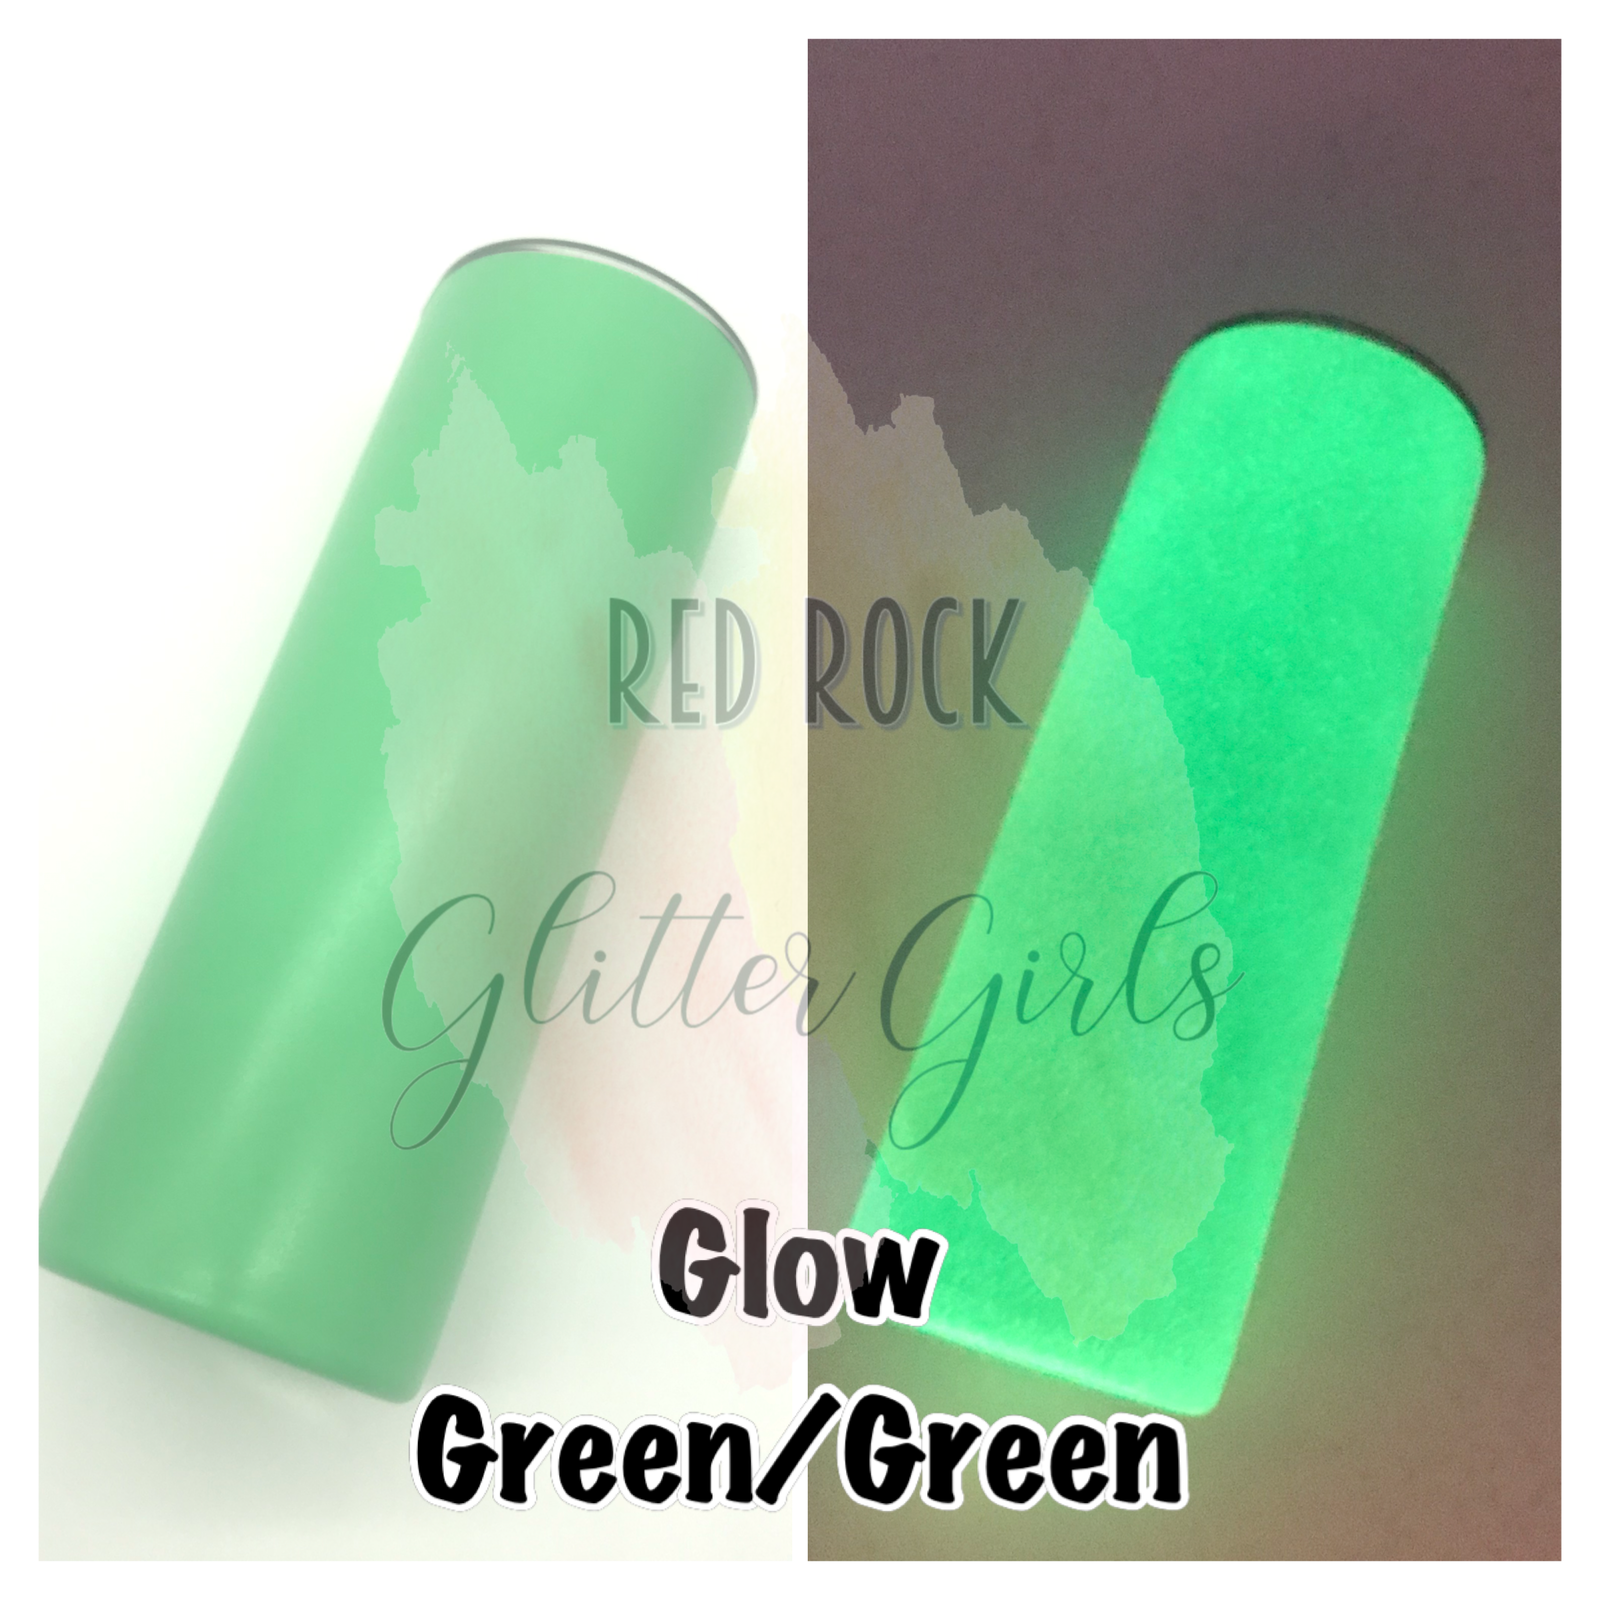 20 oz Skinny UV Sublimation Tumbler (No Taper) – Red Rock Glitter Girls